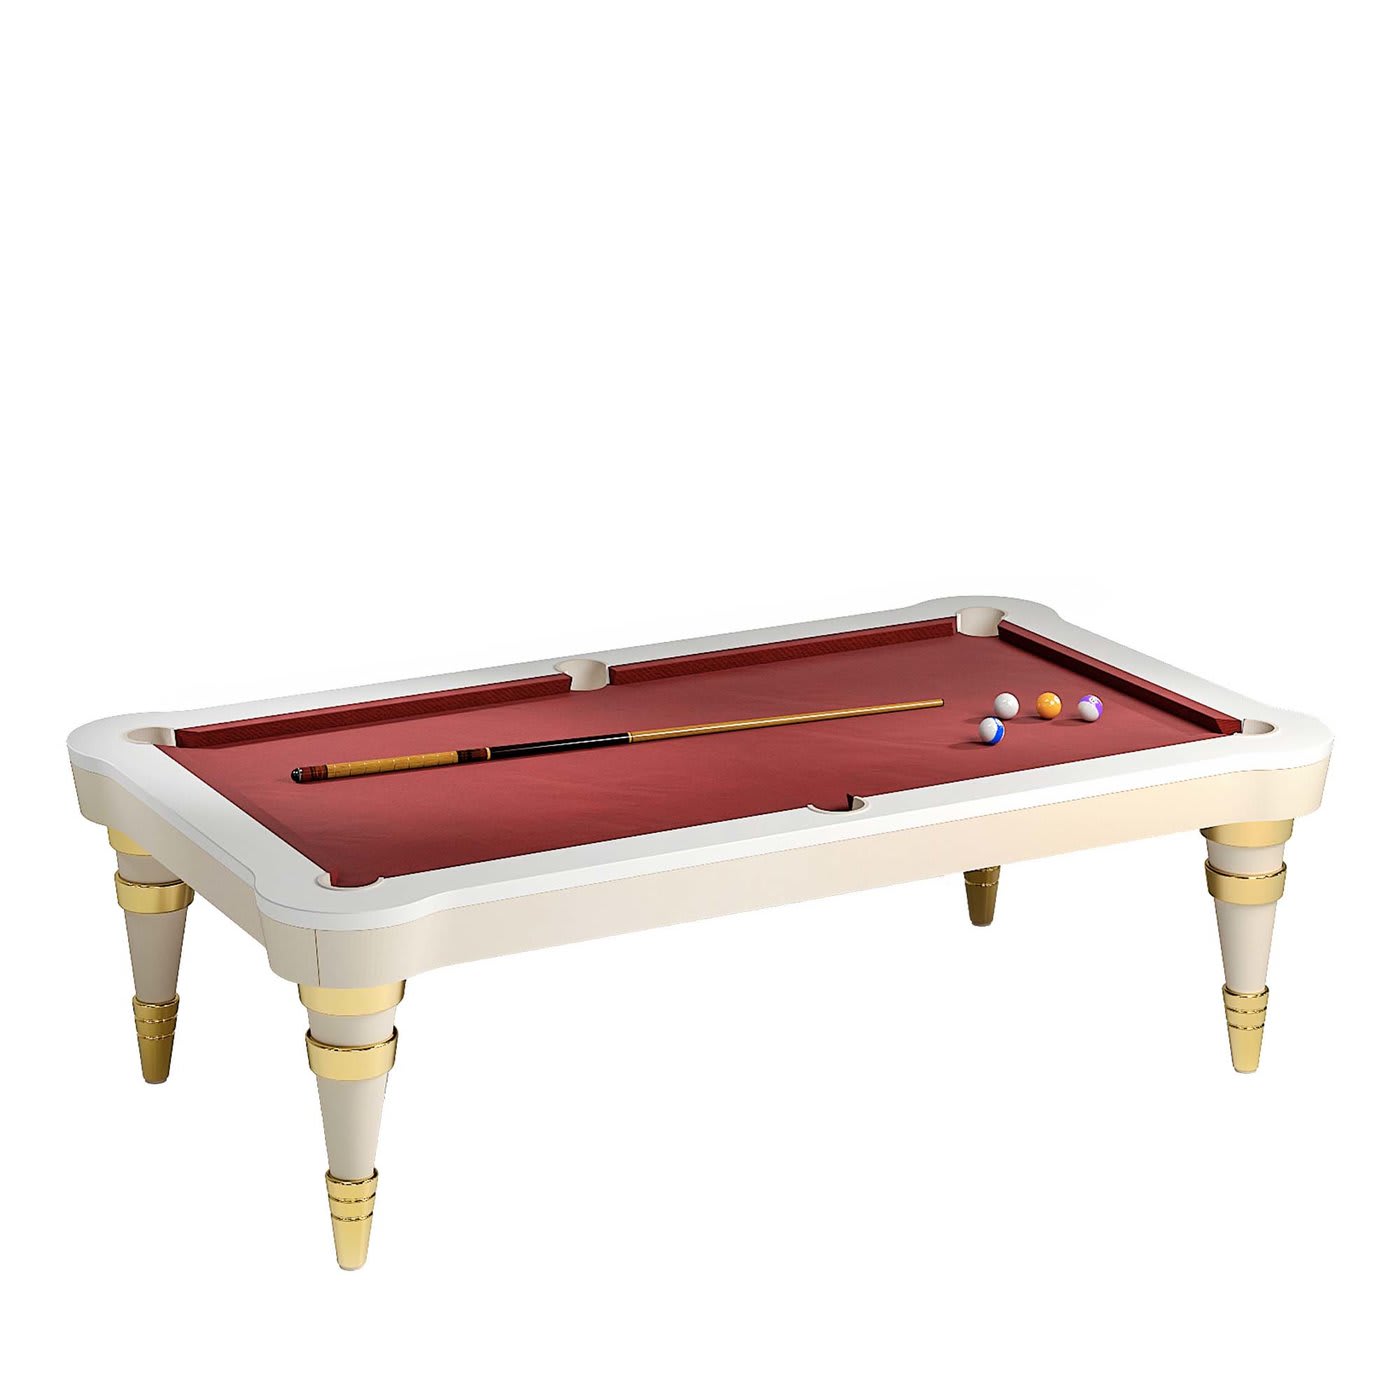 Regis burgundy pool table by Pino Vismara - Vismara